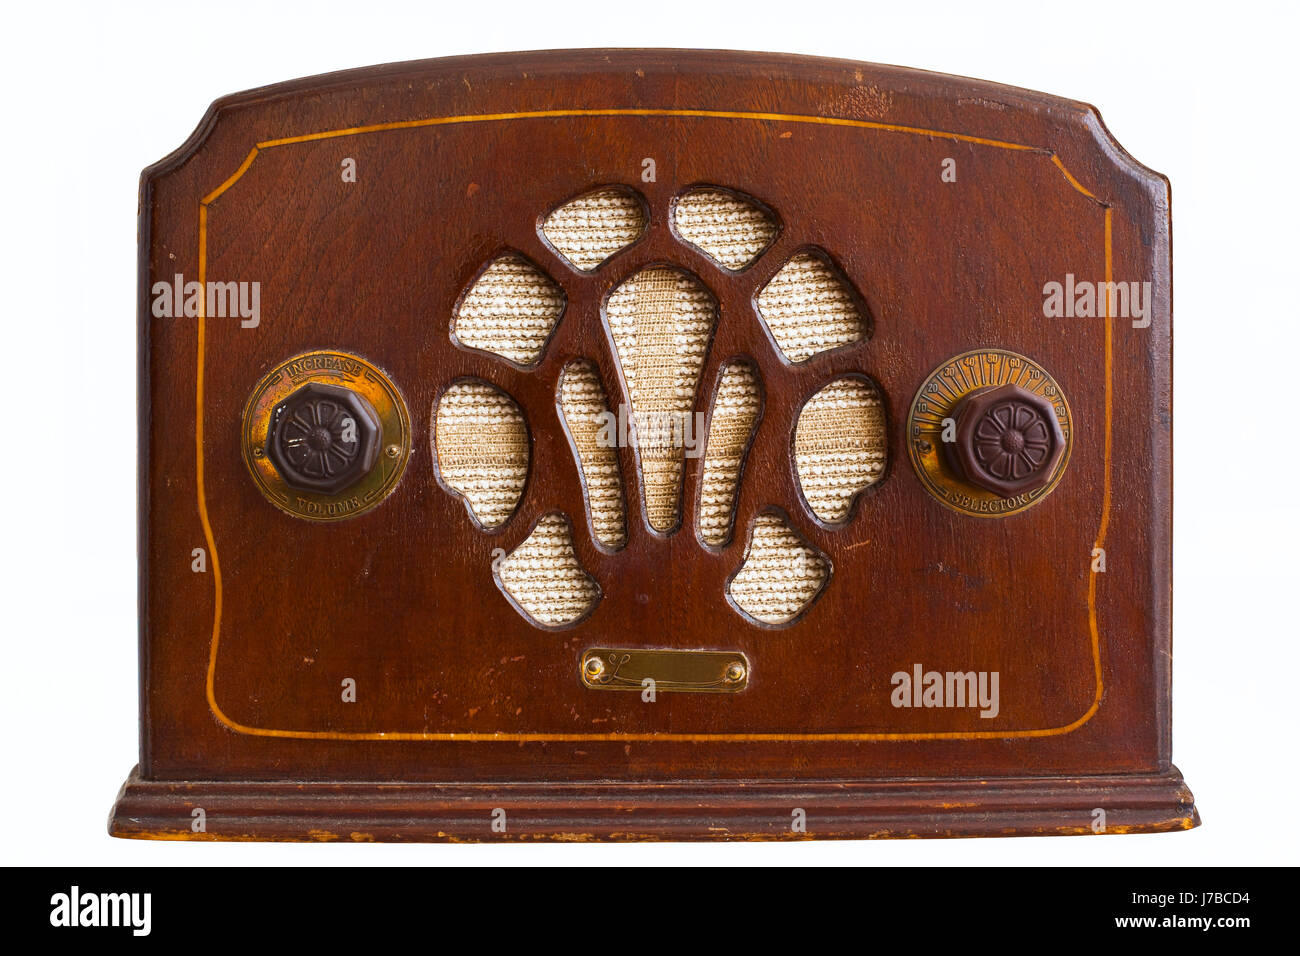 radio nostalgia vintage radio speaker wooden valve radio waves old ancient  Stock Photo - Alamy